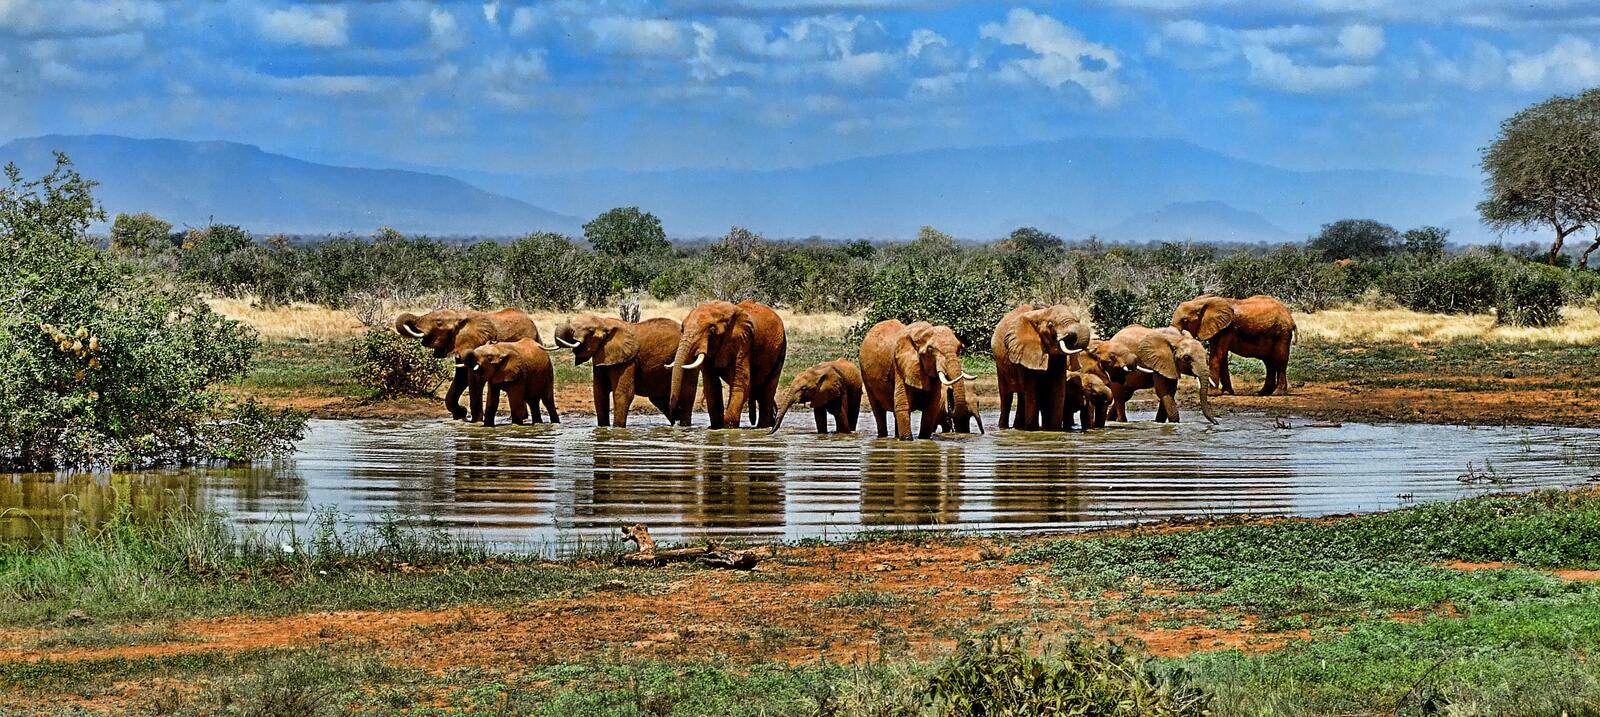 Wallpapers elephant Safari ranch on the desktop